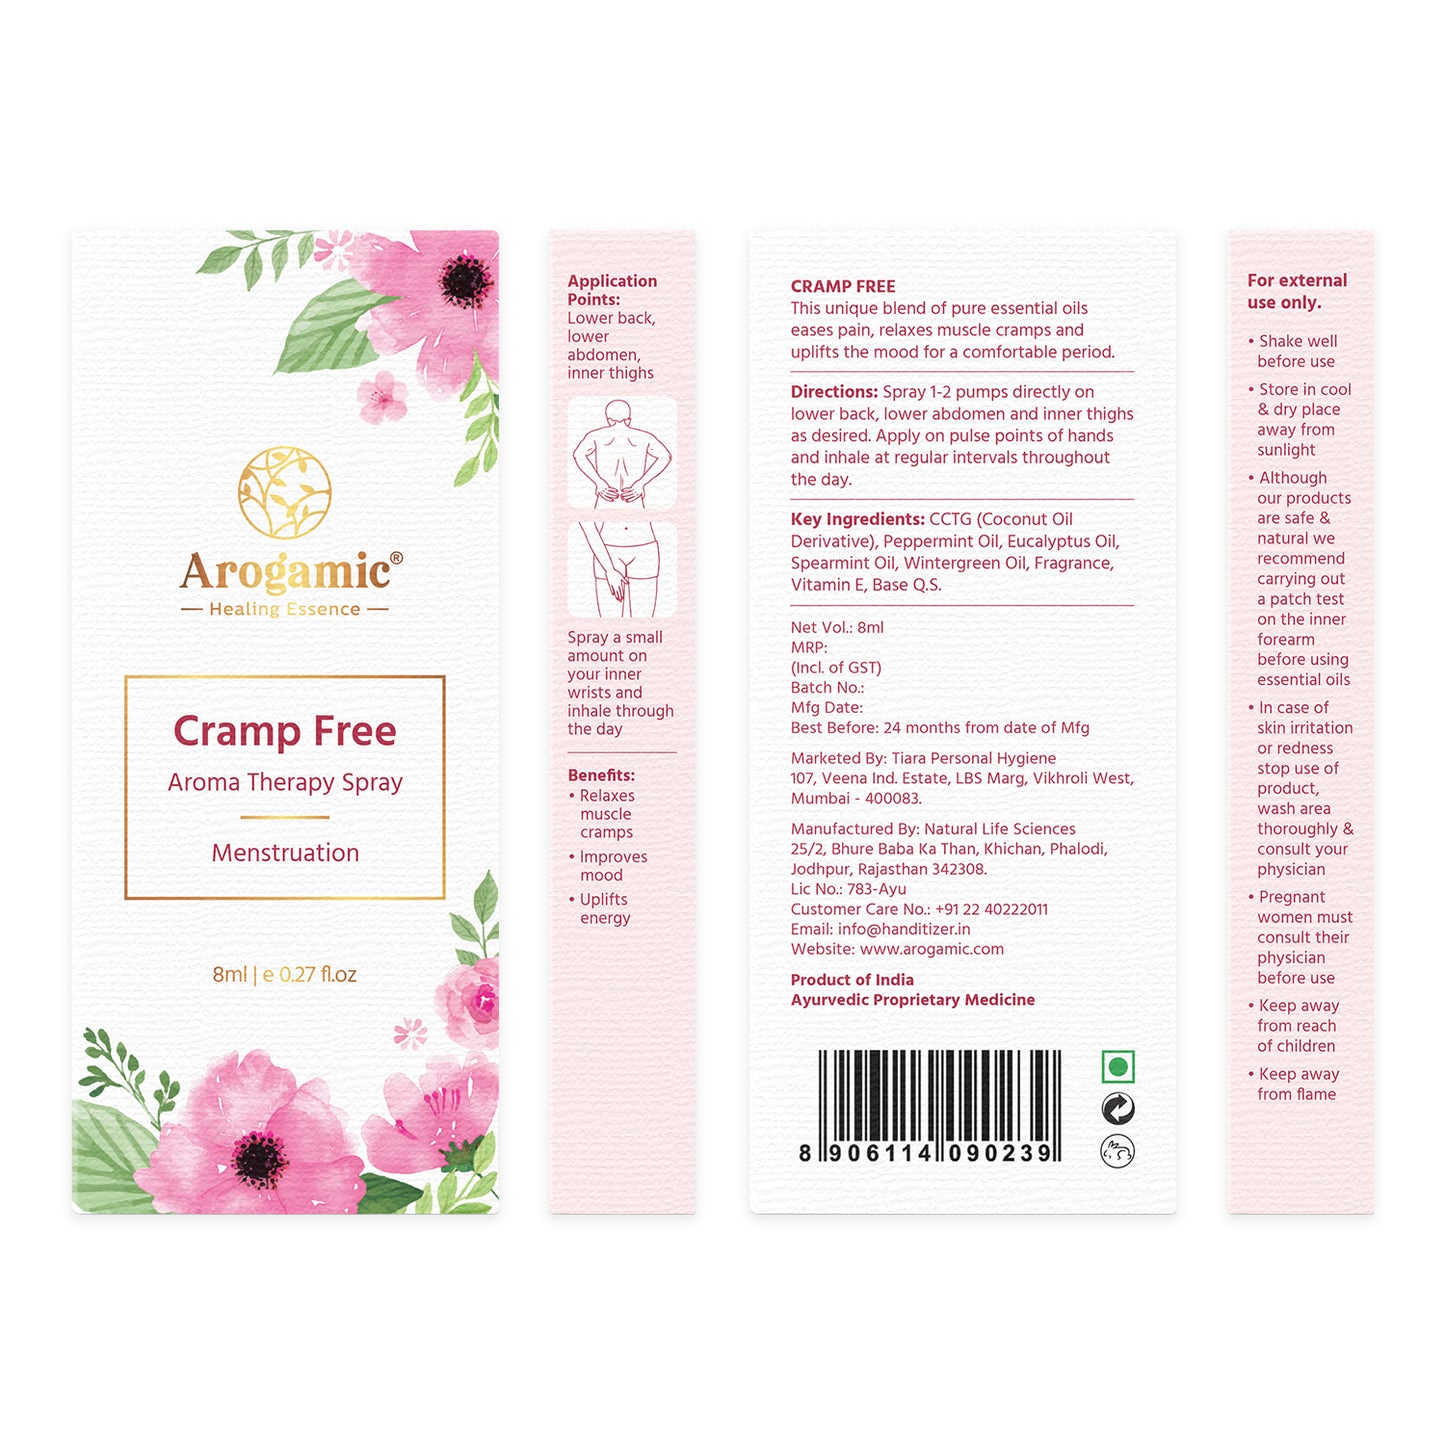 Cramp Free Aromatherapy Spray 8ml